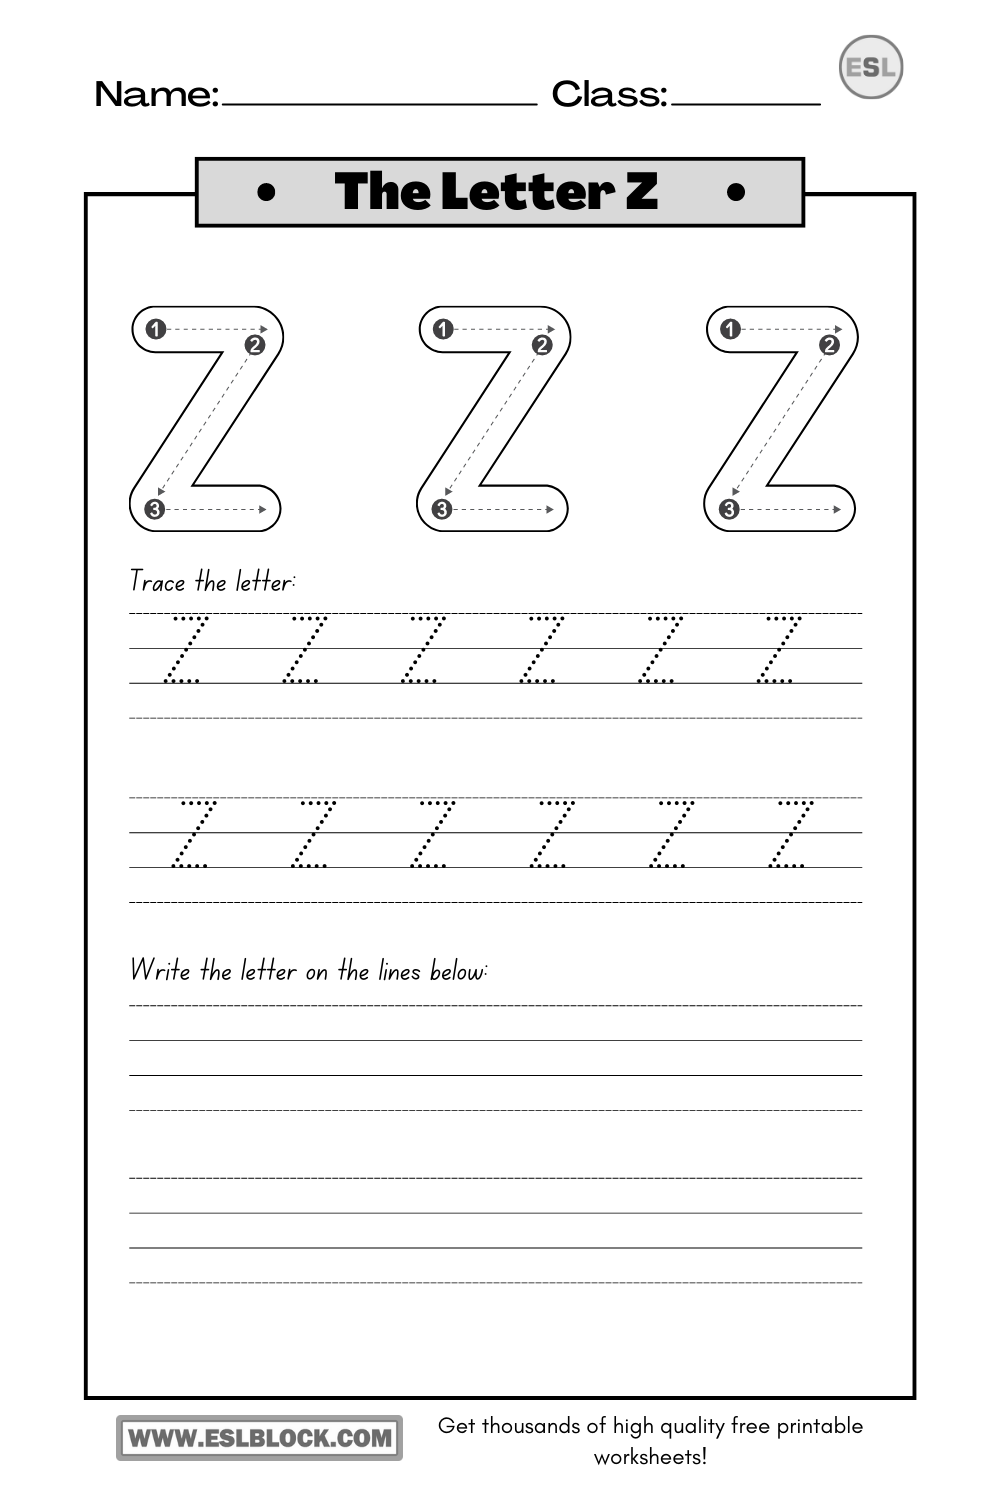 Alphabet Z Printable Worksheets, Free Worksheets, Kindergarten Worksheets, Letter Z Printable Worksheets, Preschool Worksheets, Tracing the Letter Z, Tracing the letter Z Printable, Tracing the Letter Z Worksheets, Tracing Worksheets, Worksheets